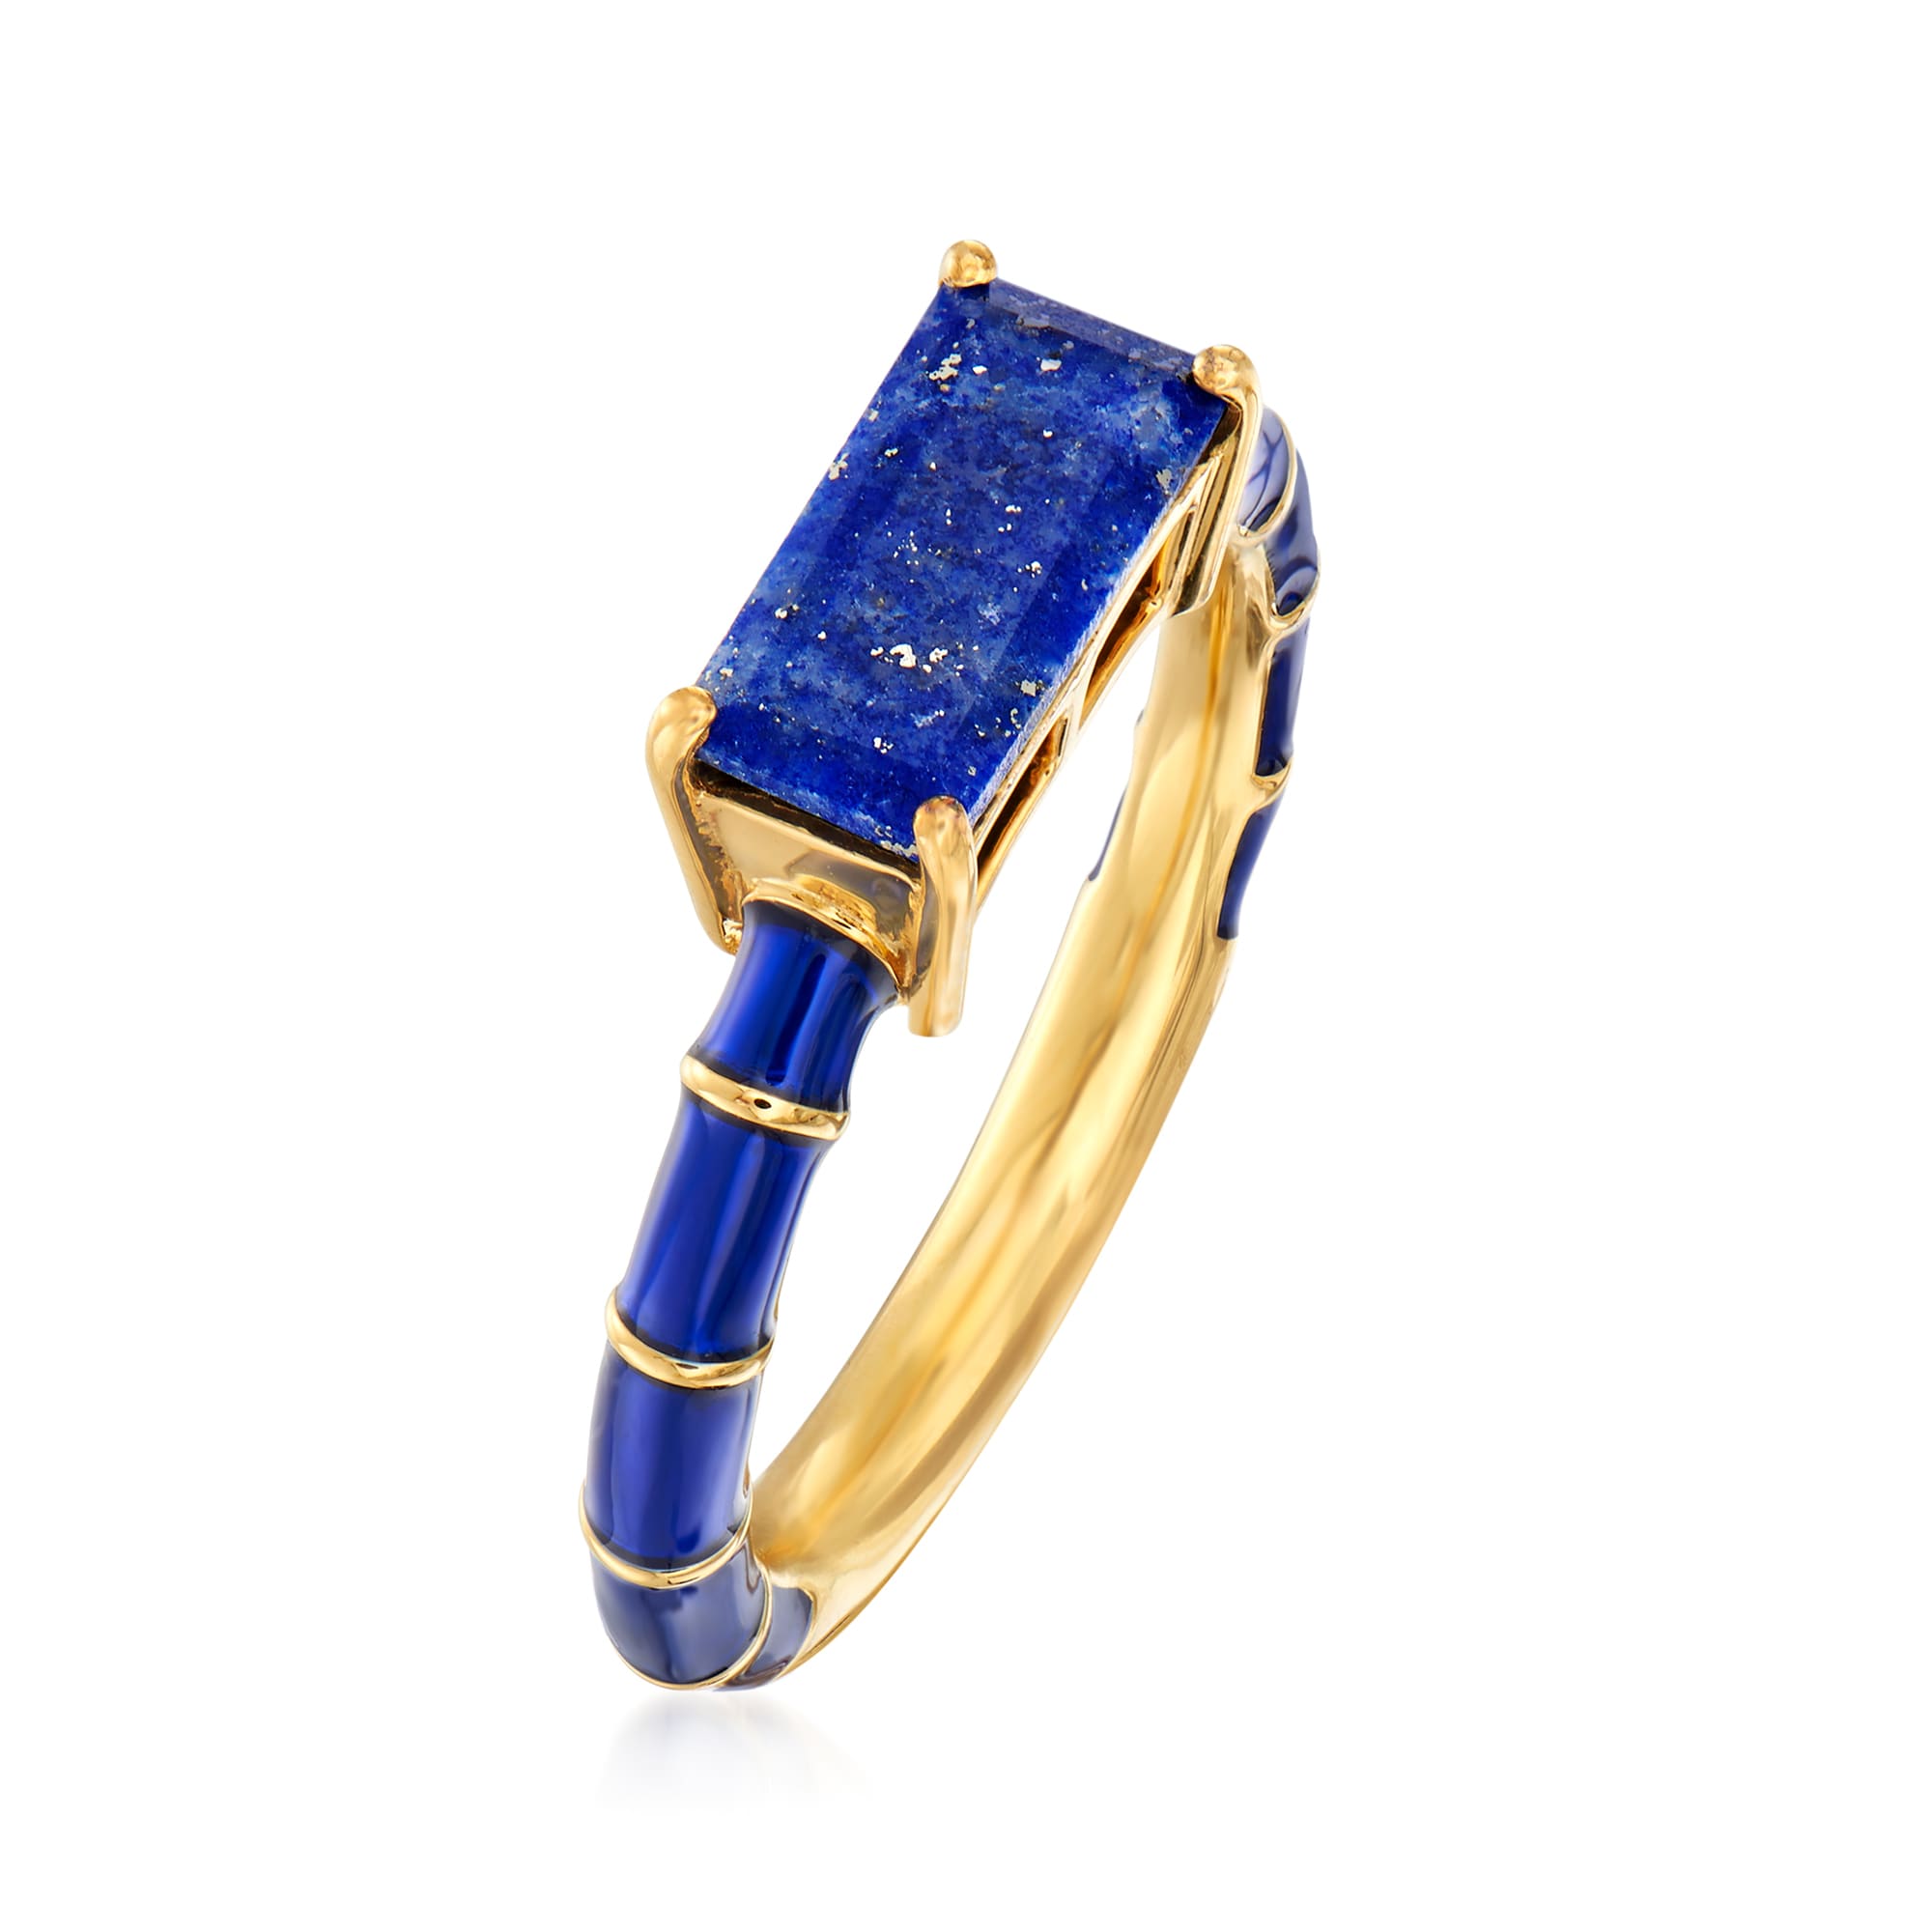 Lapis and Dark Blue Enamel Ring in 18kt Gold Over Sterling | Ross